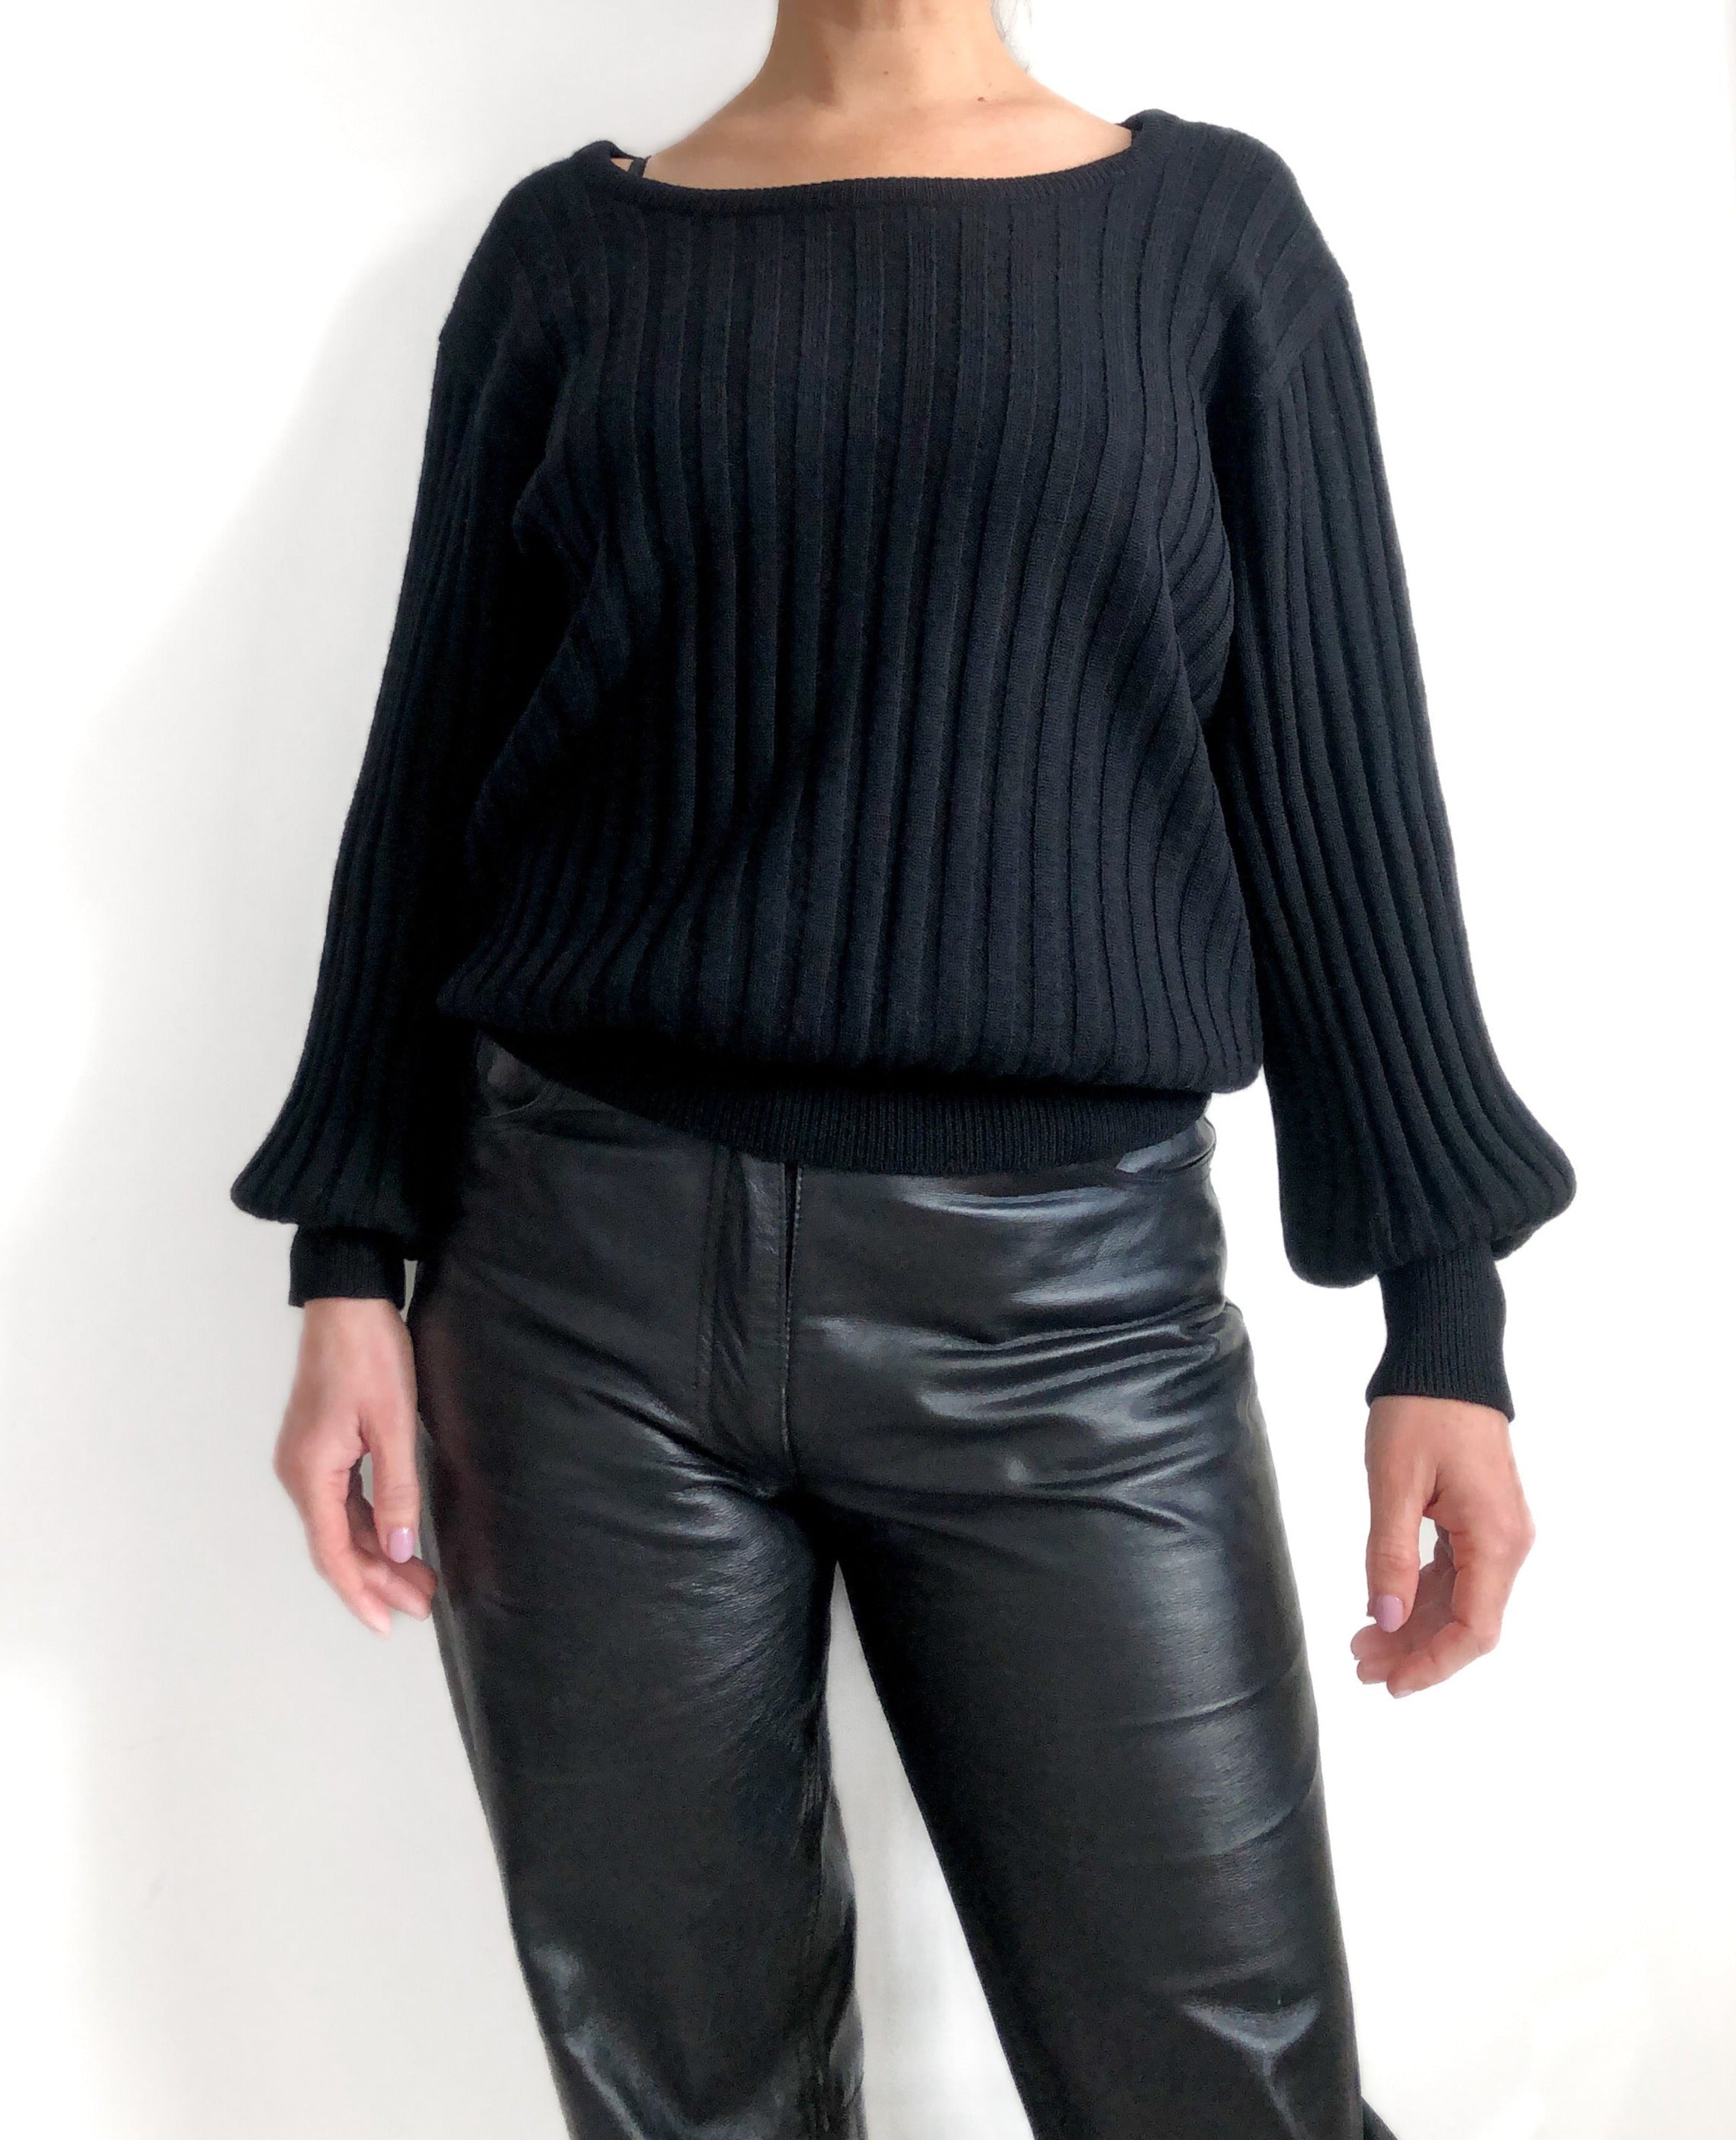 Holt Renfrew Balloon Sleeve Sweater, Size Large Wide Ribbed Black Wool Luxury Sweater,